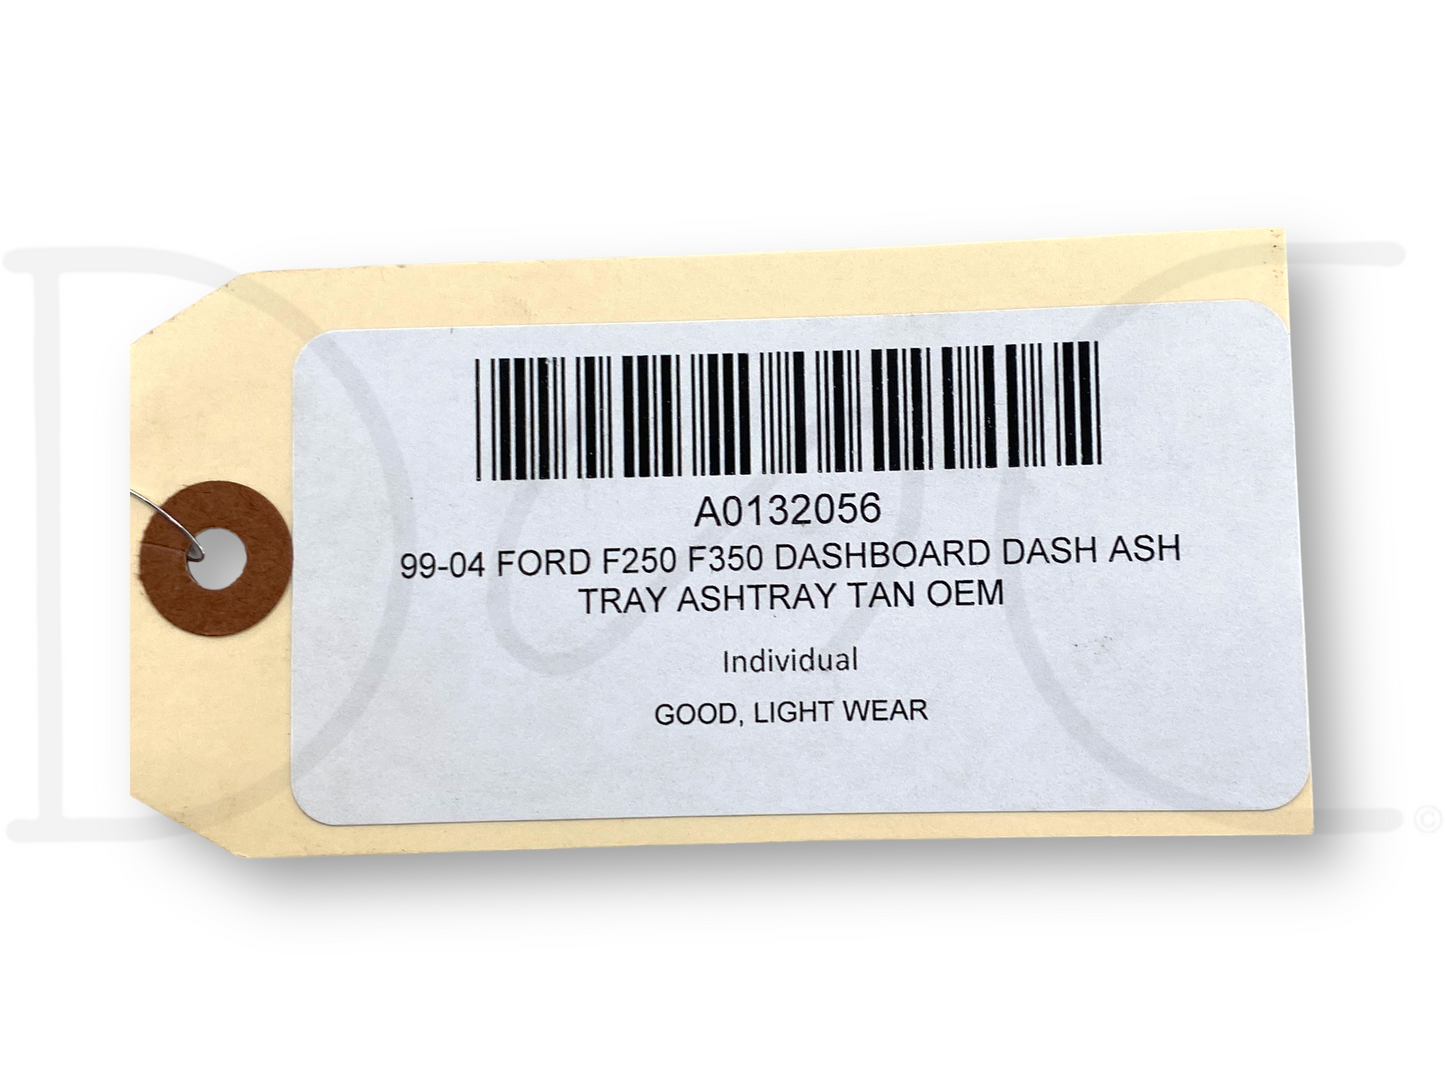 99-04 Ford F250 F350 Dashboard Dash Ash Tray Ashtray Tan OEM